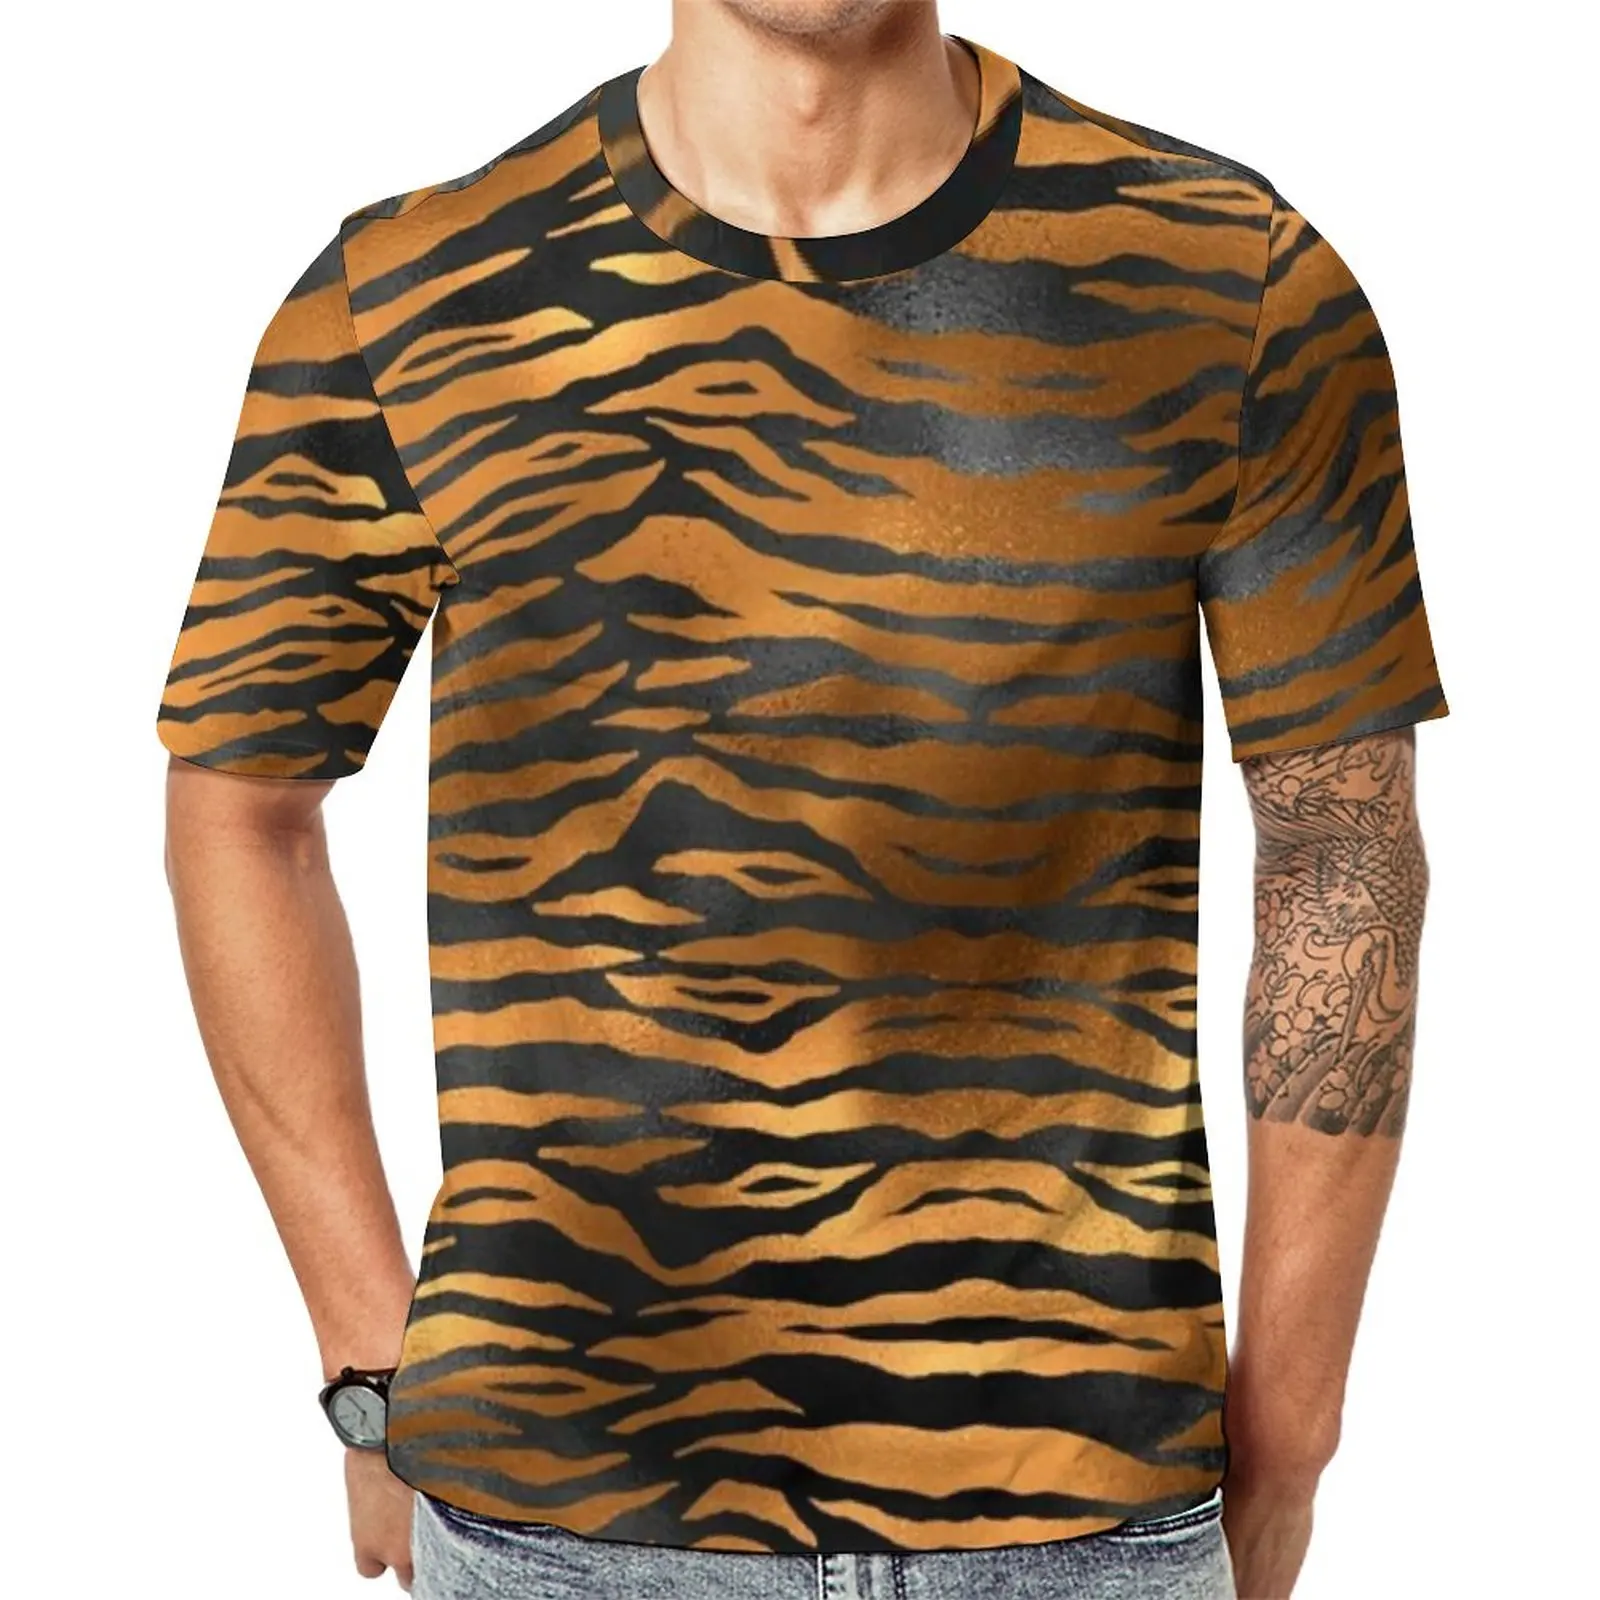 

Tiger Print Stripes T-Shirt Glam Black Gold Men Cool T Shirts Original Graphic Tee Shirt Short Sleeve Aesthetic Plus Size Tops